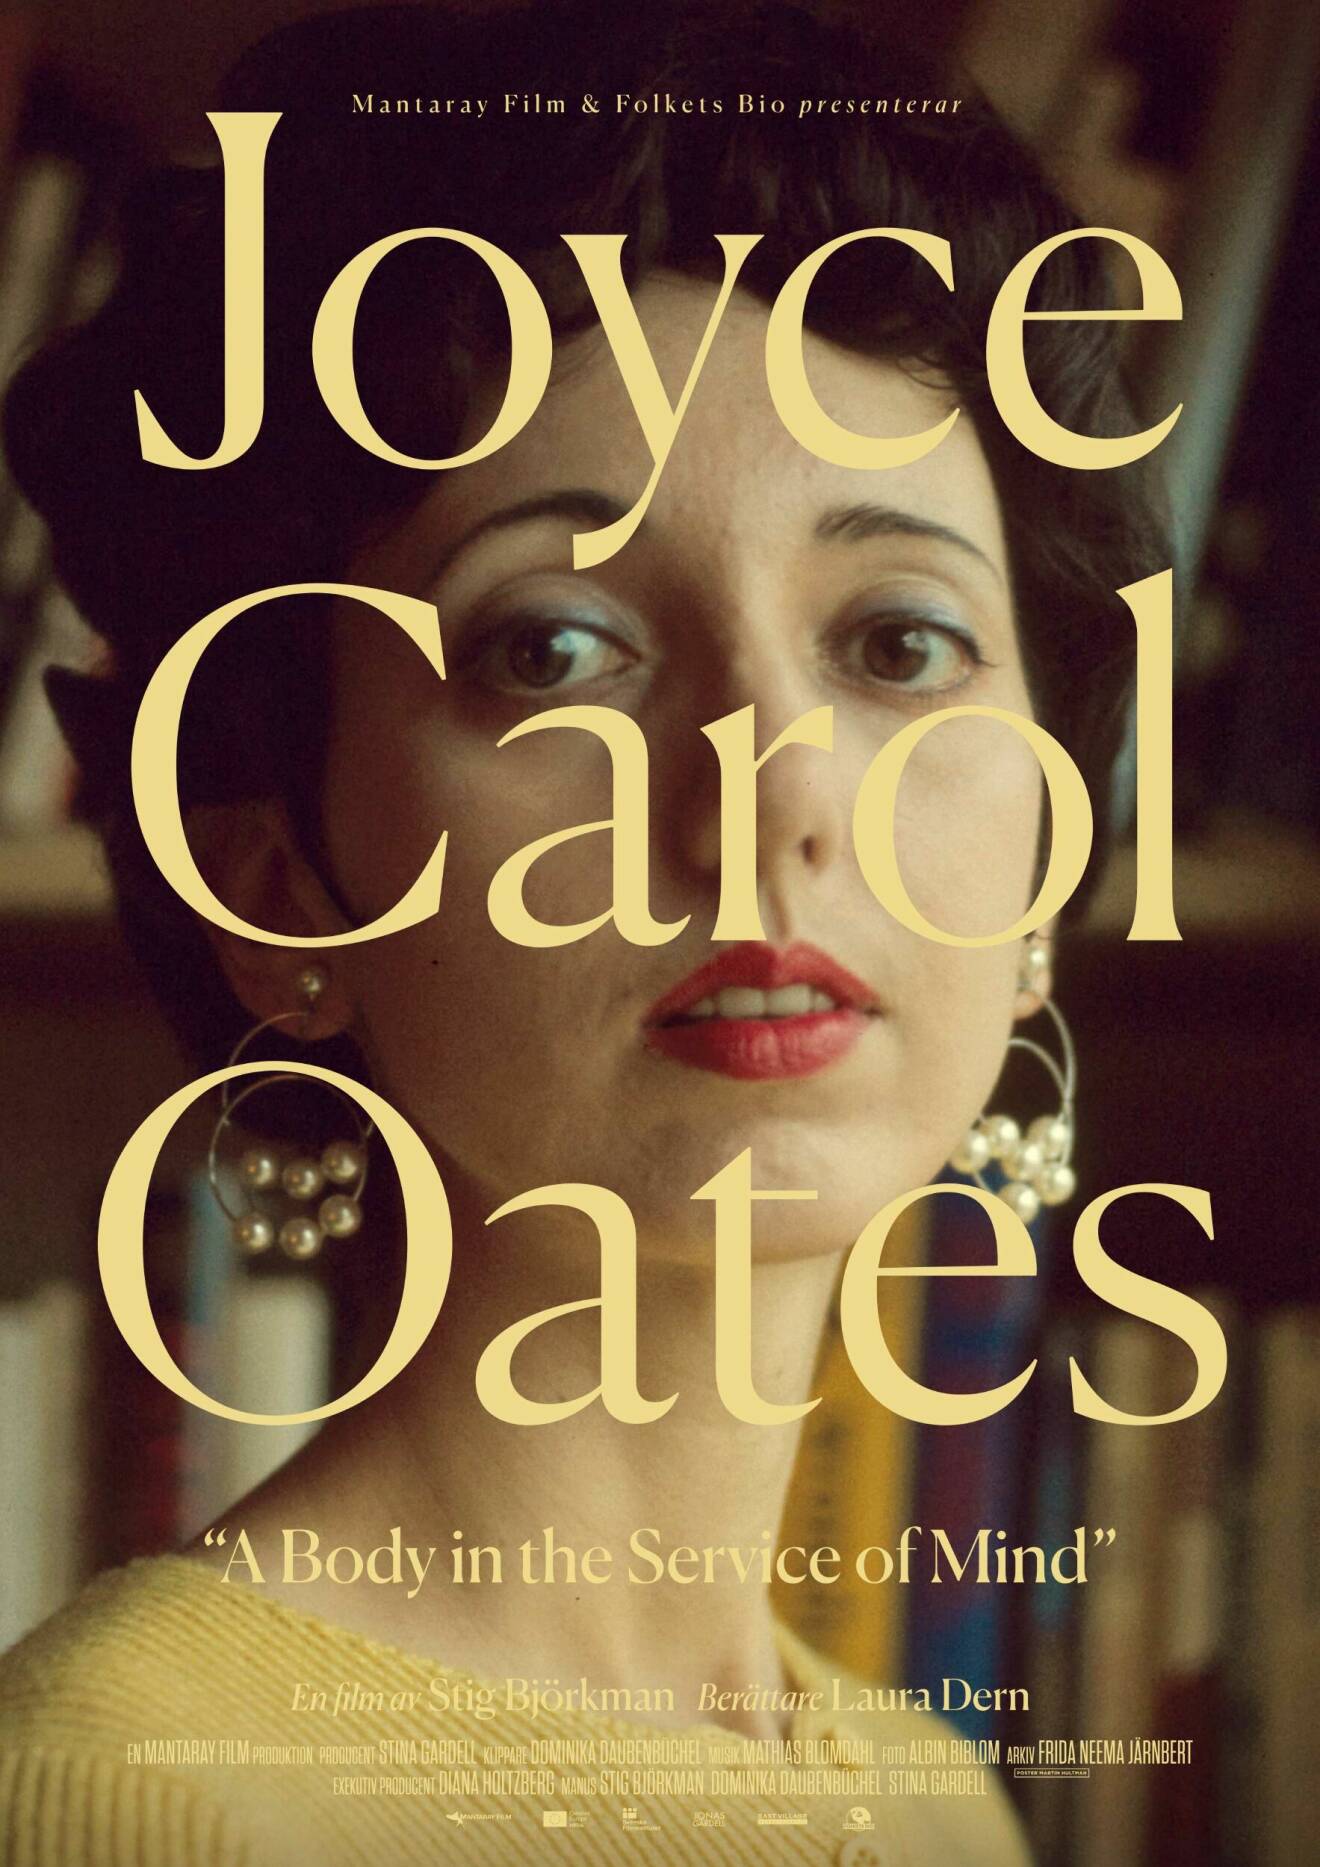 Joyce Carol Oates: A body in the service of mind.